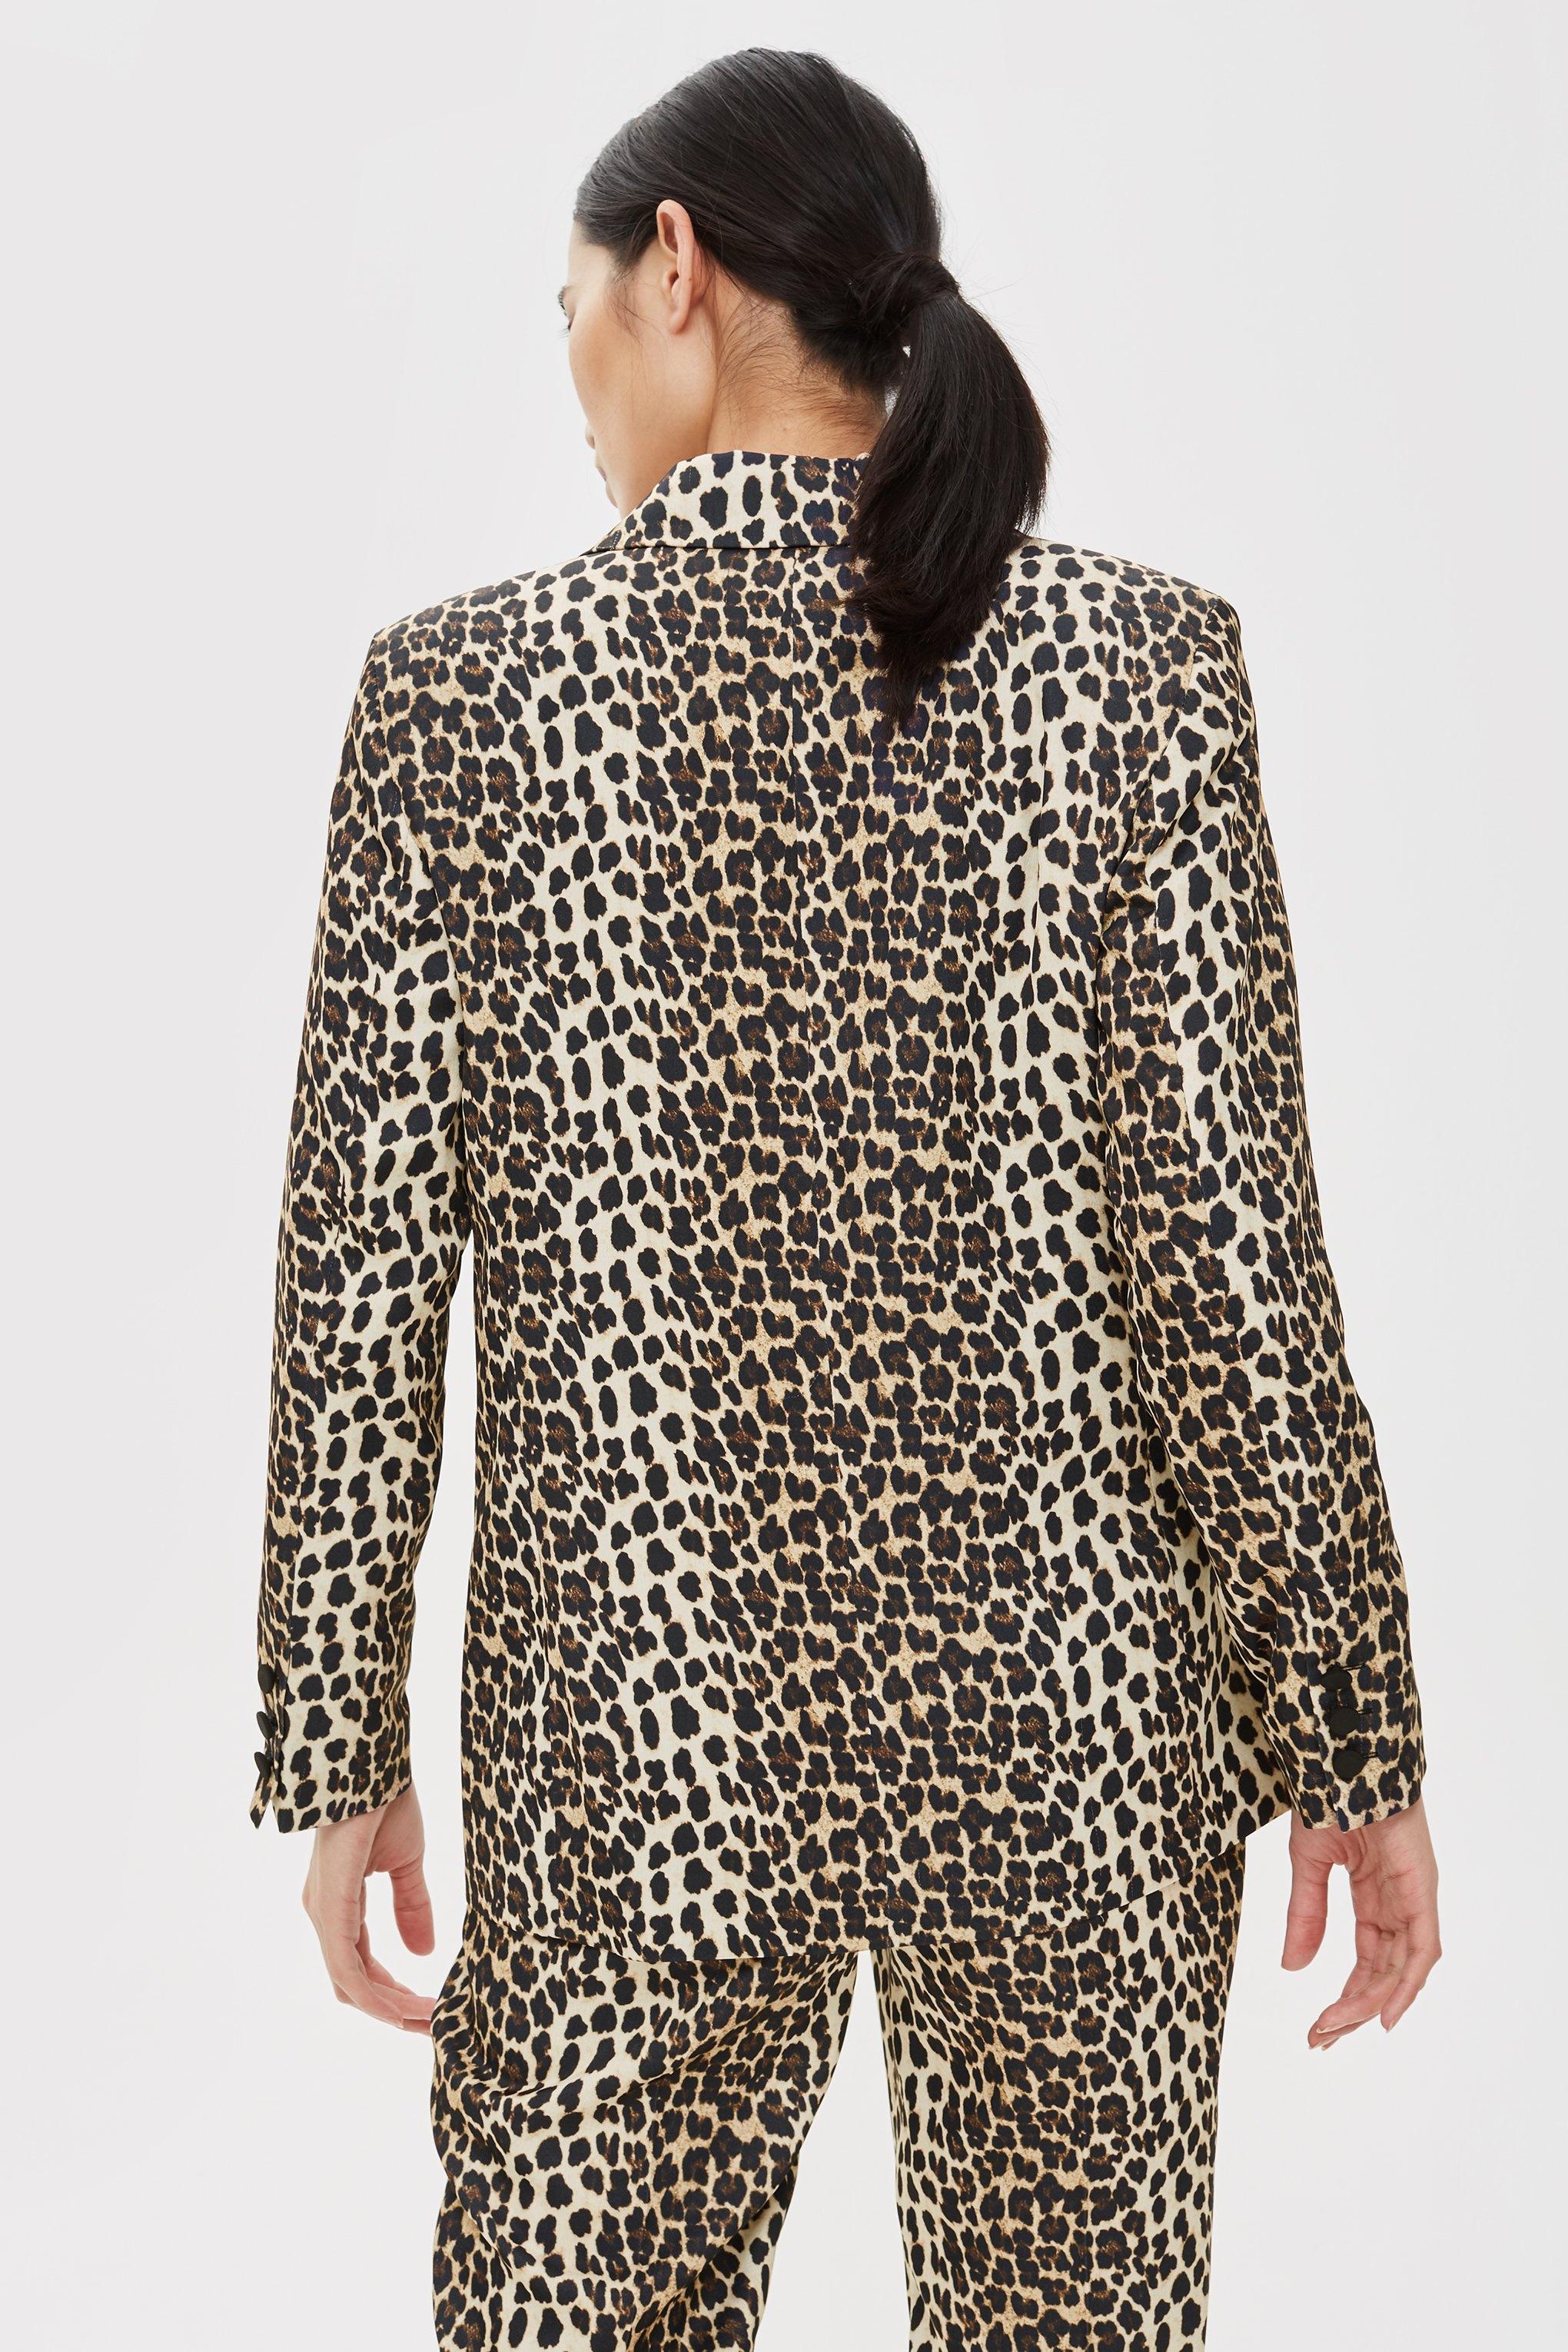 TOPSHOP Synthetic Petite Brown Leopard Print Suit Jacket - Lyst